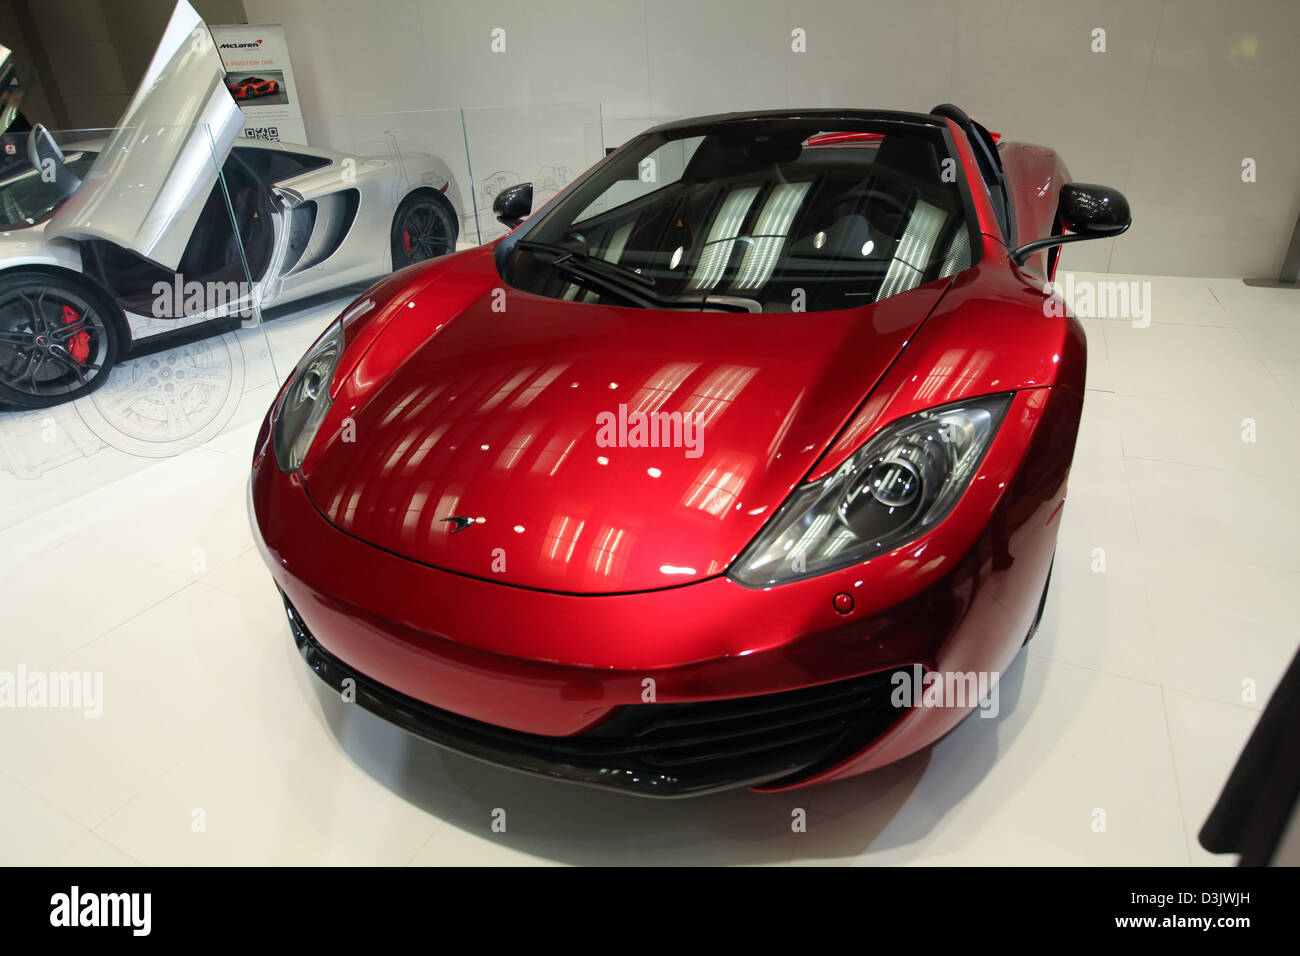 shiny red sports car show room Stock Photo